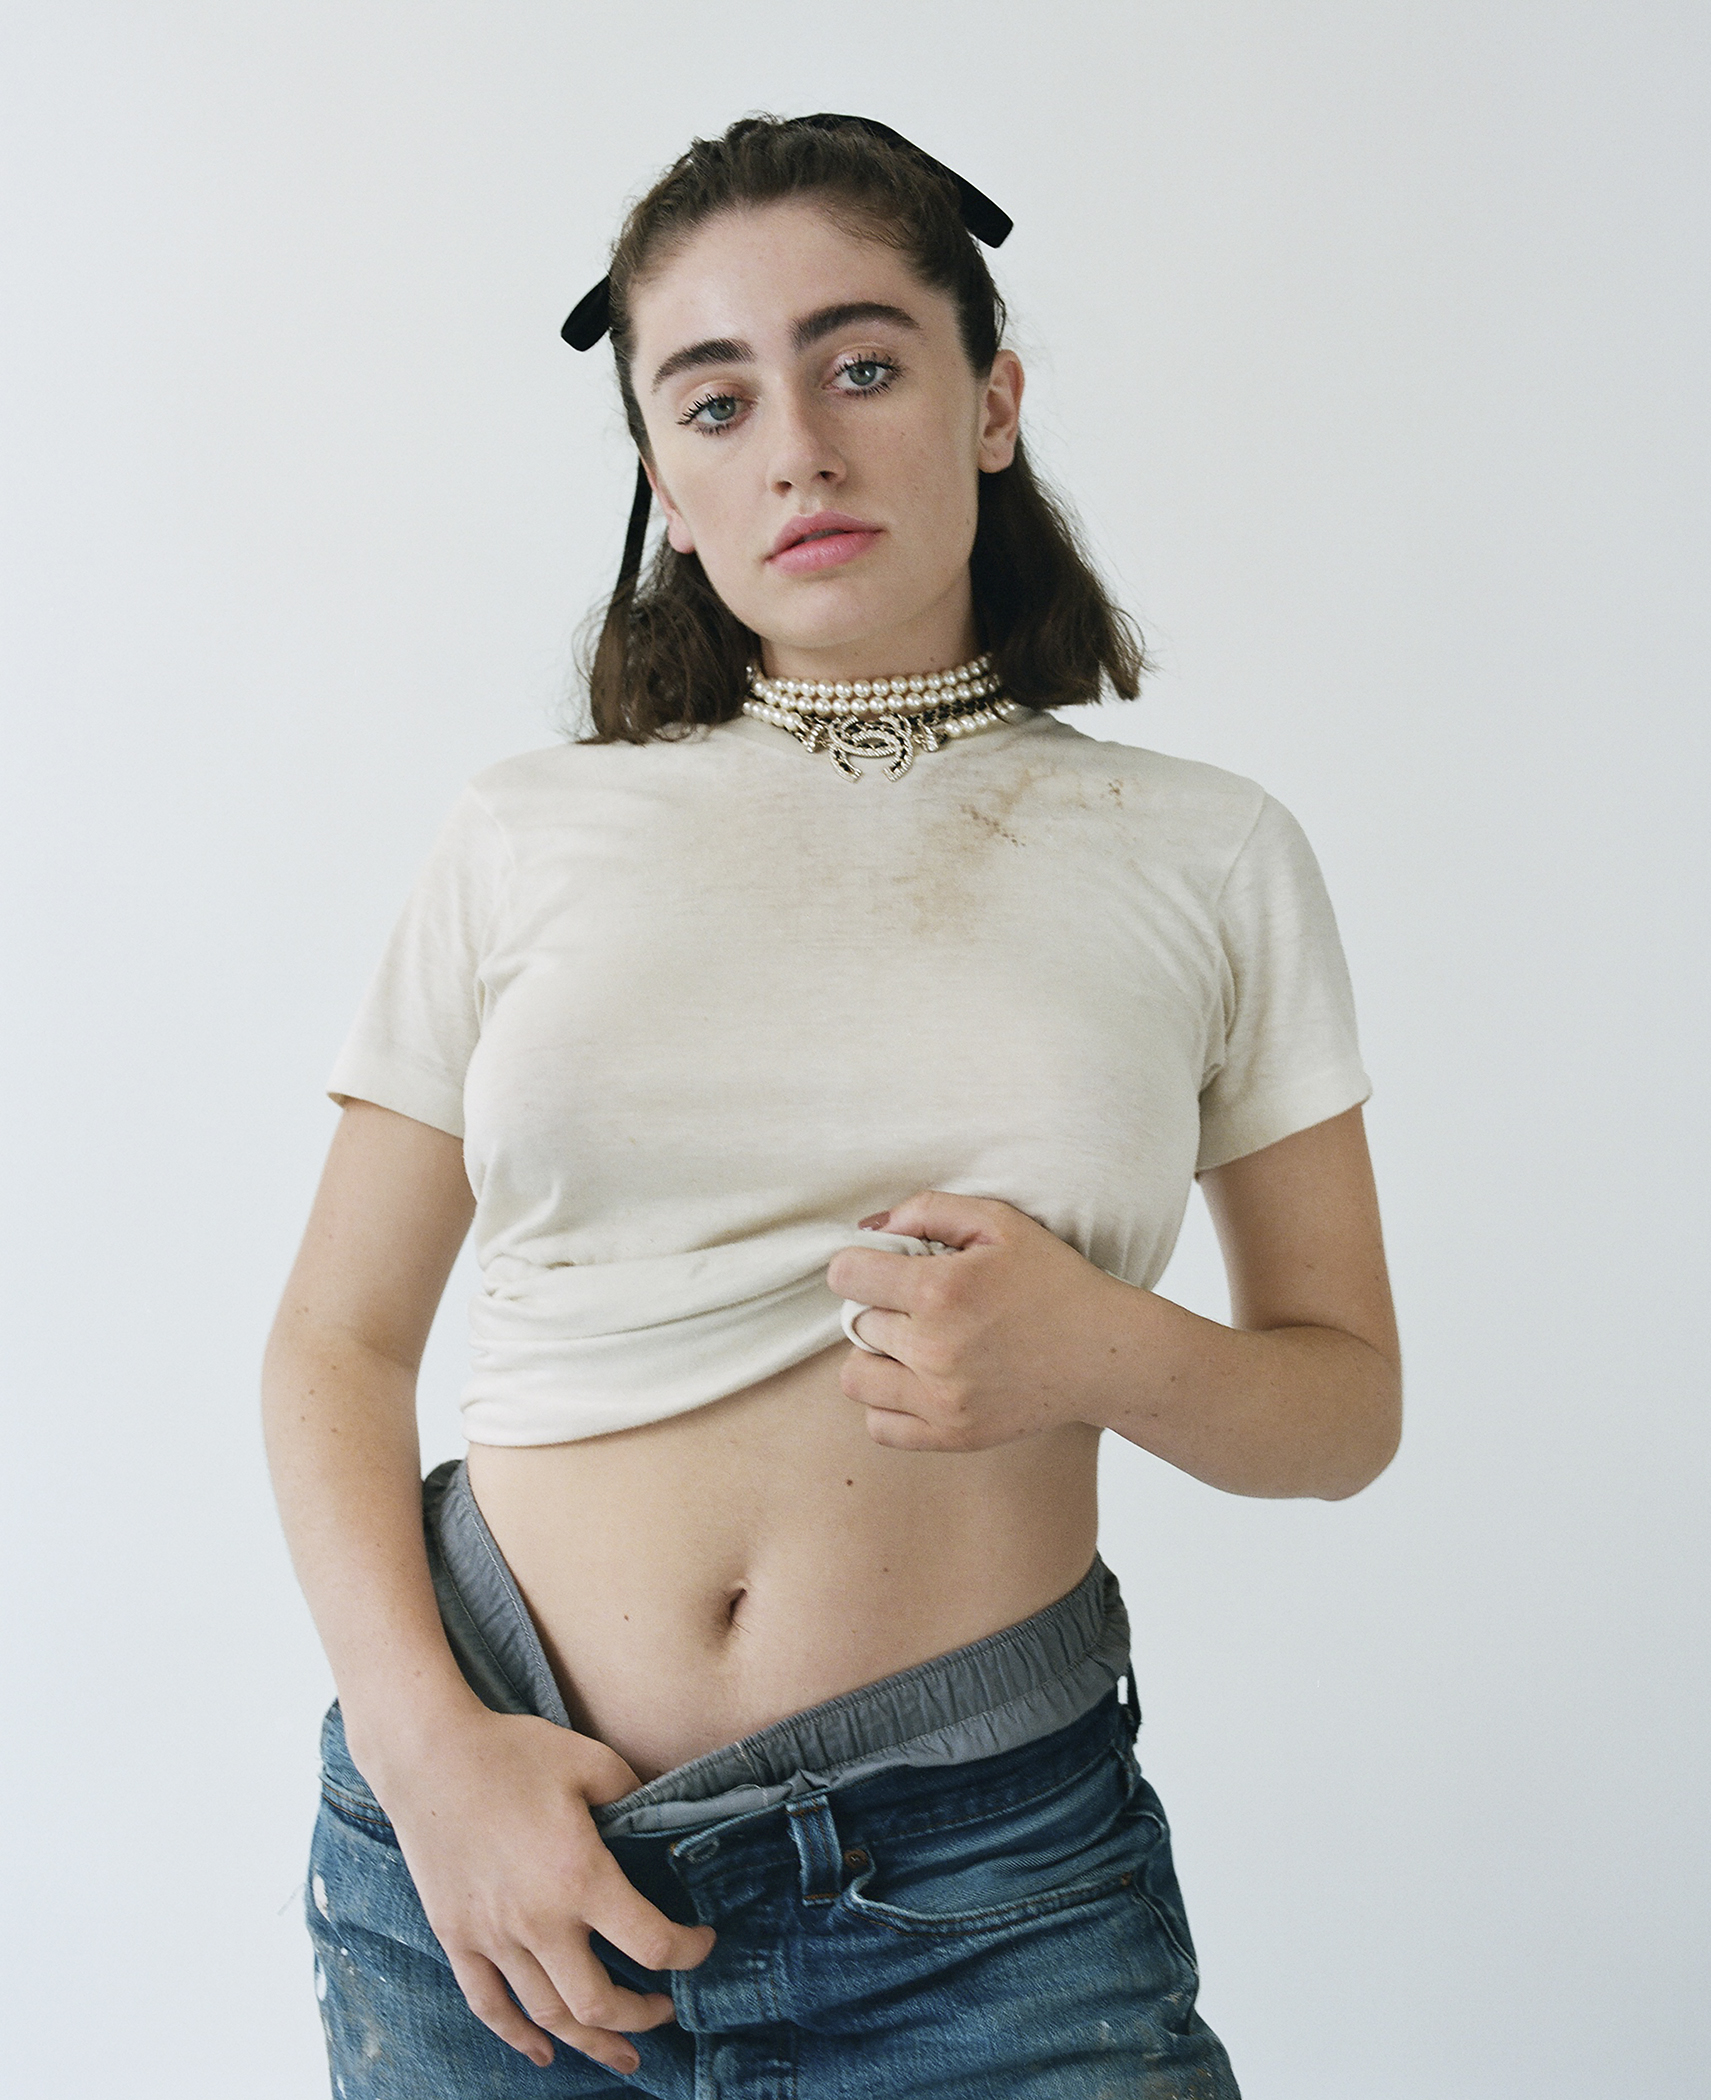 HommeGirls x Chanel - Emily Rosser LA Portfolio, Raine Trainor, Art Direction